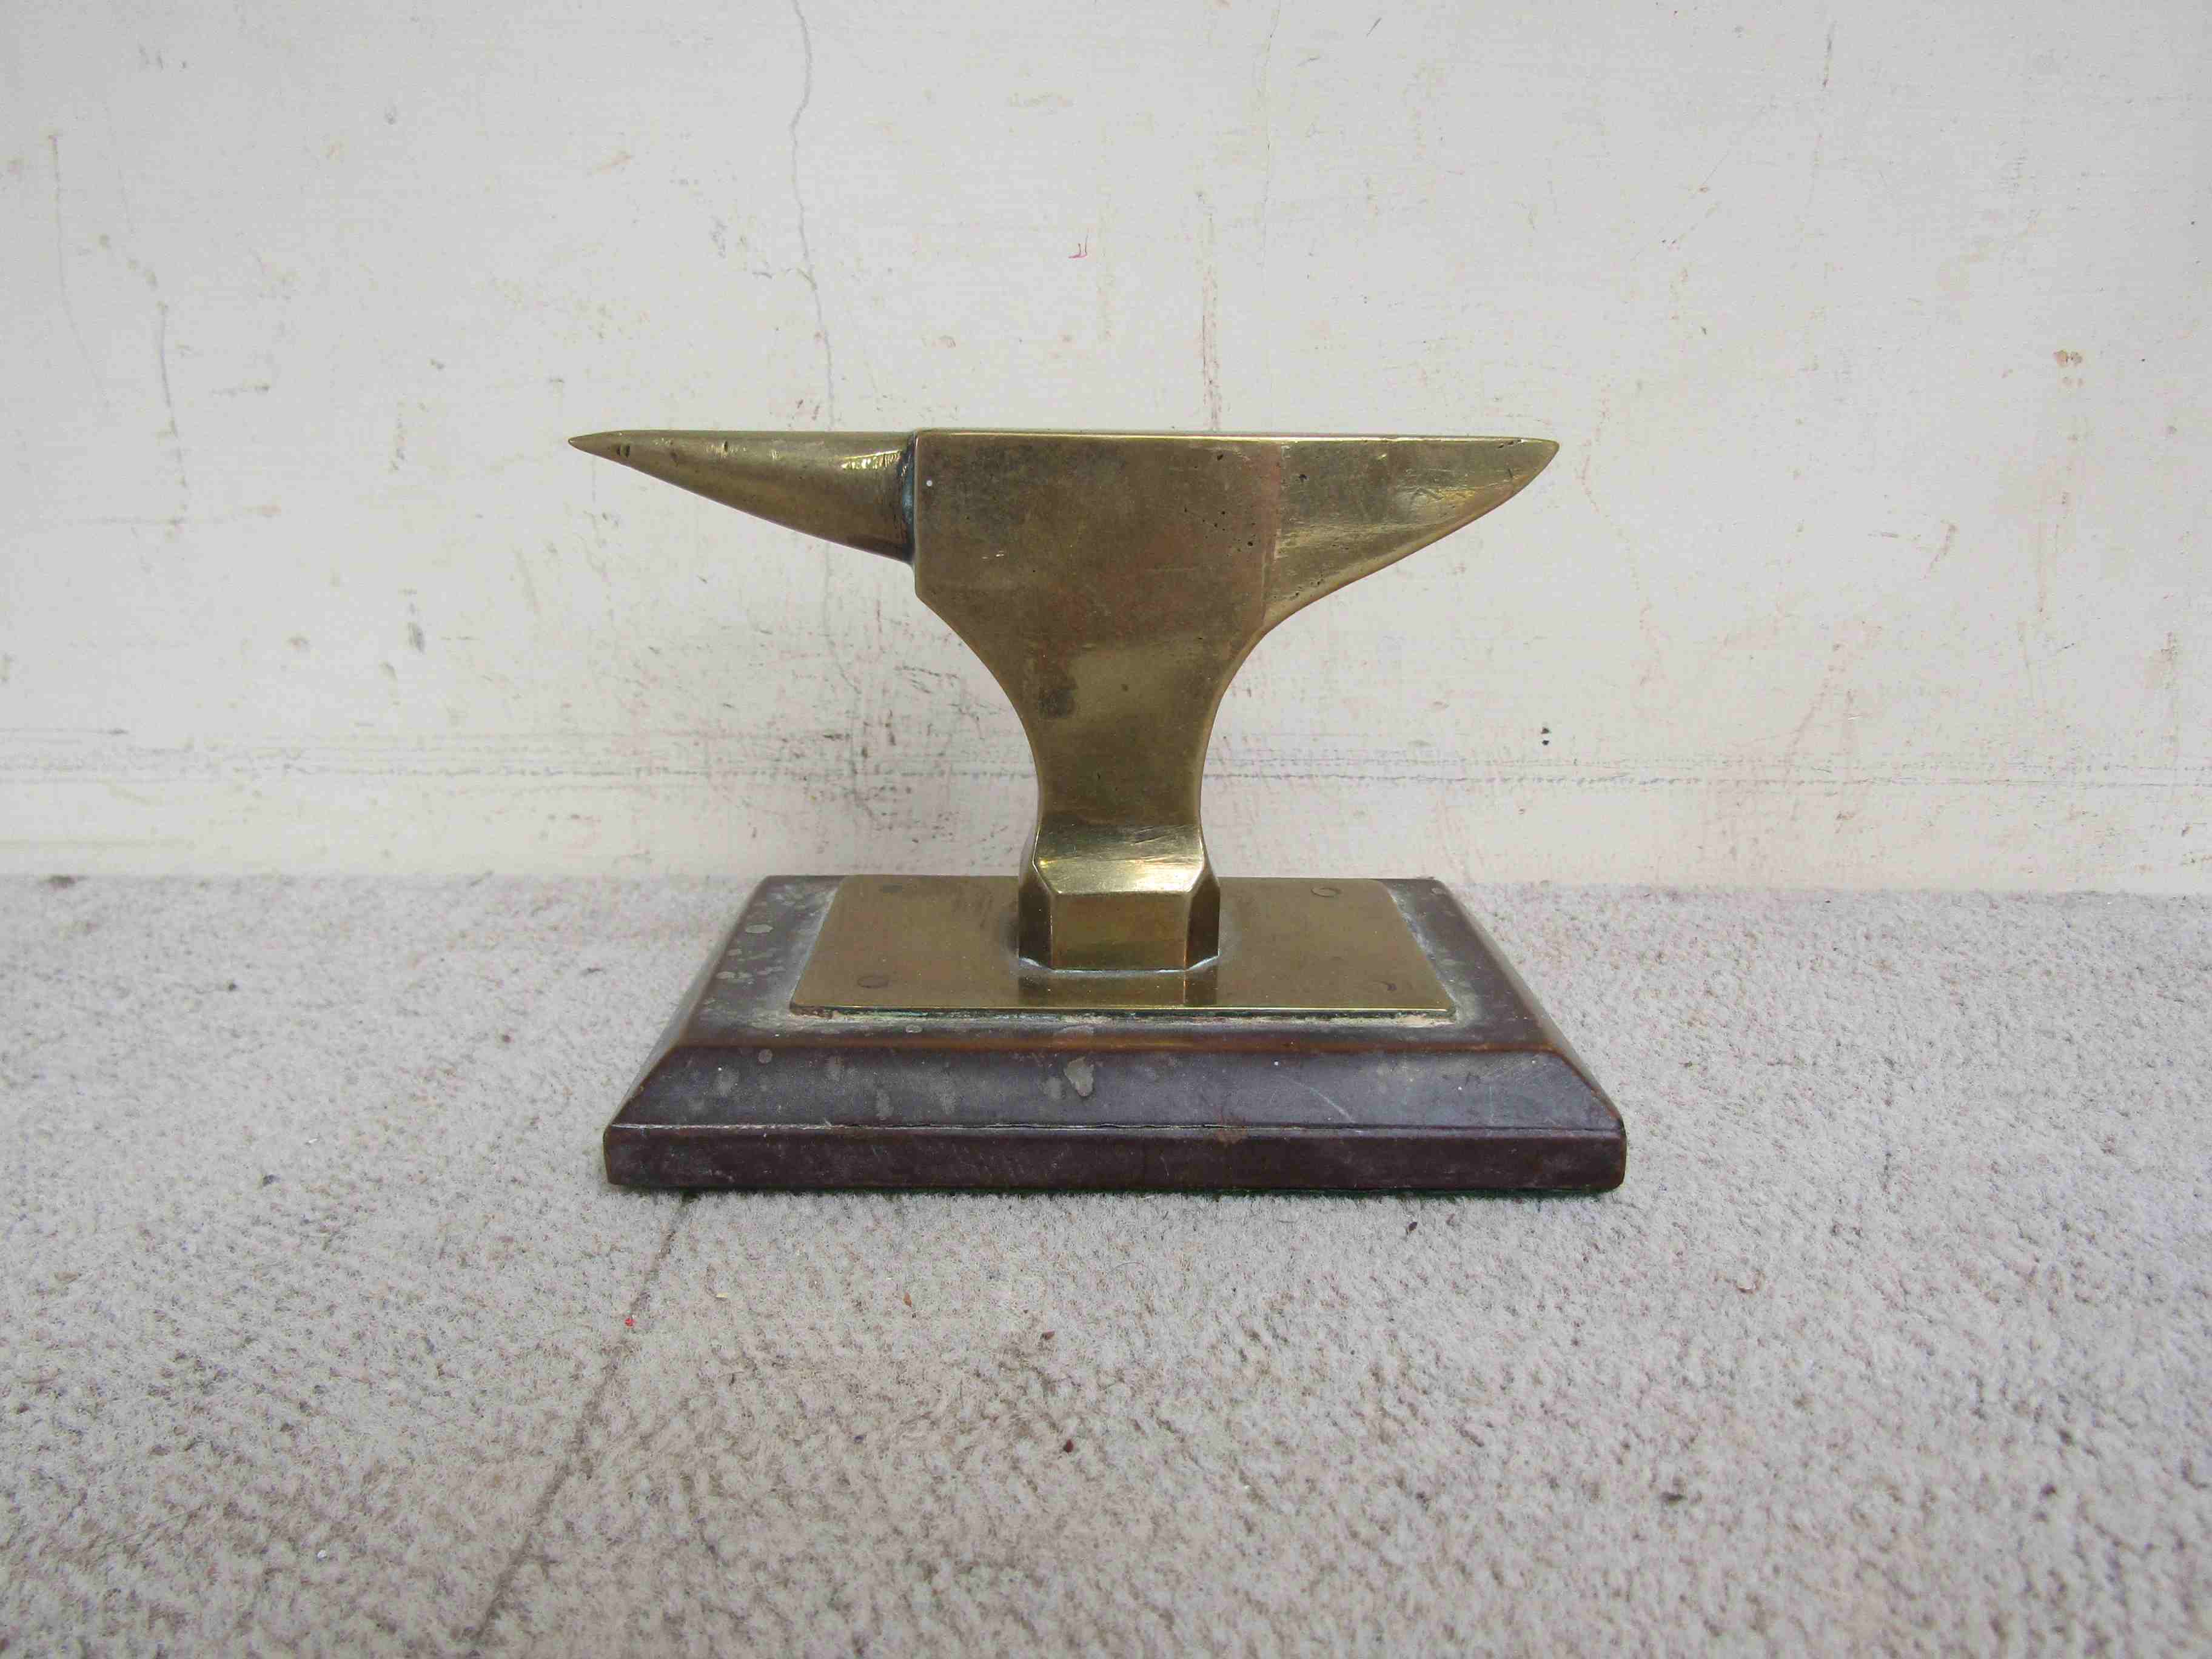 A brass anvil mascot mounted on a plinth